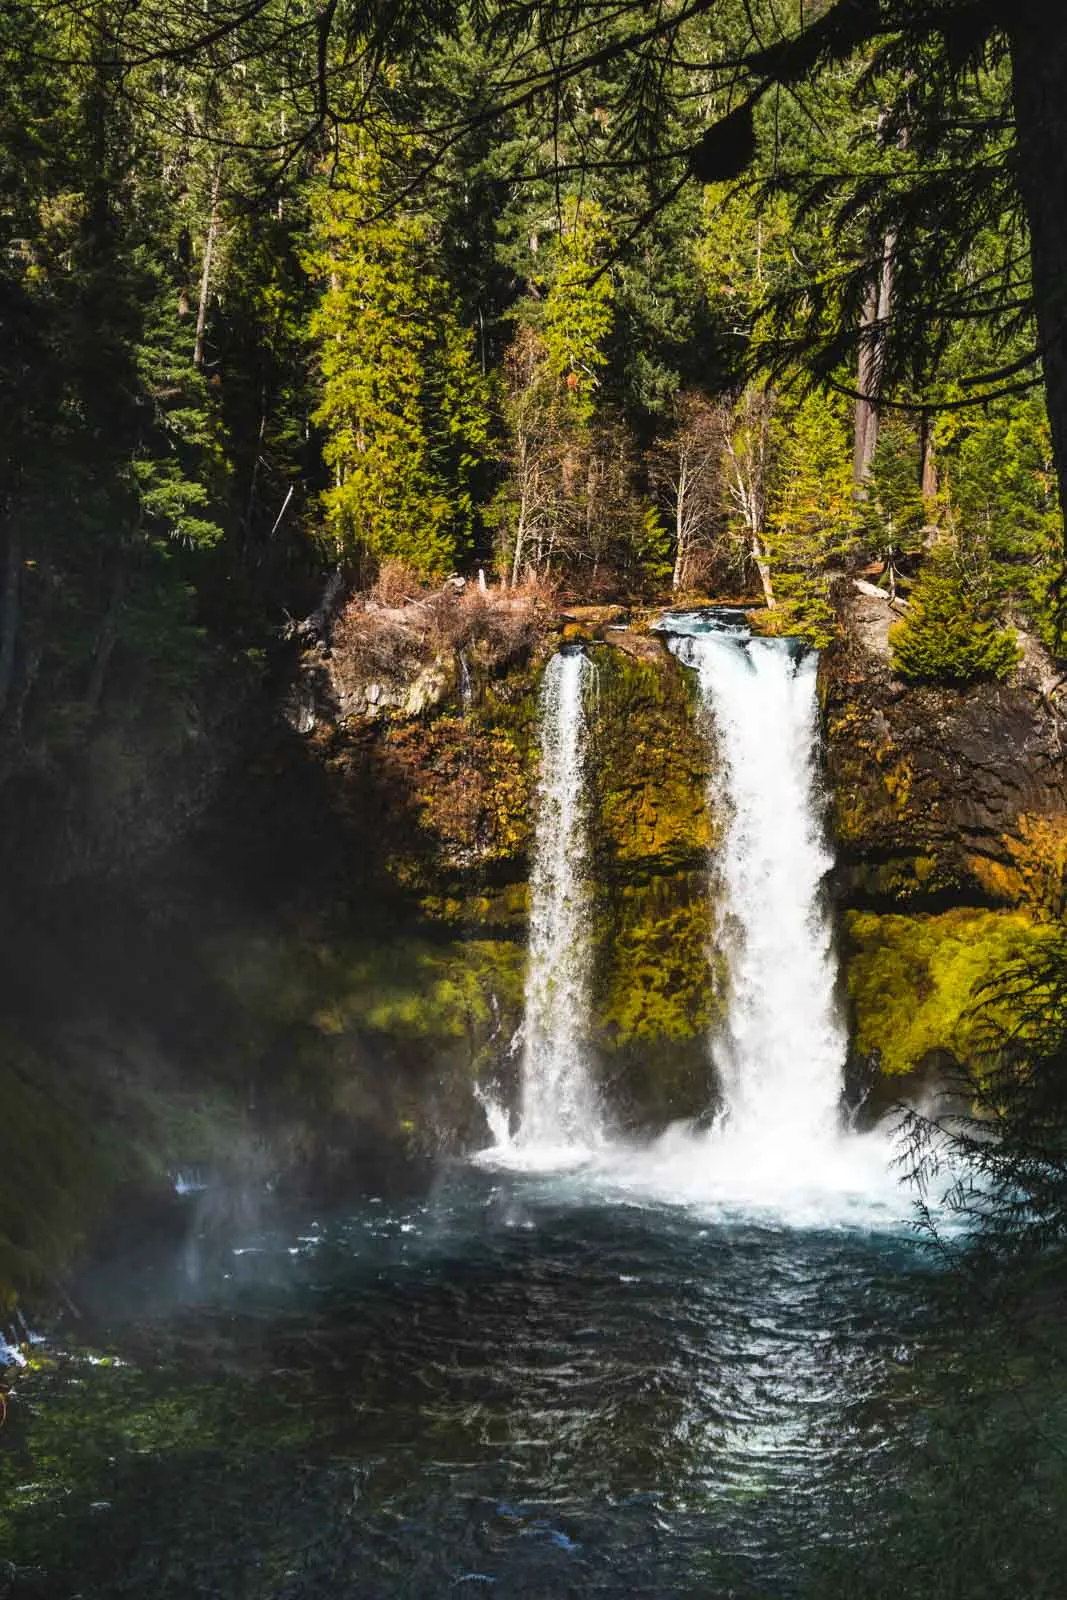 Koosah Falls is an easy Oregon waterfall hike.